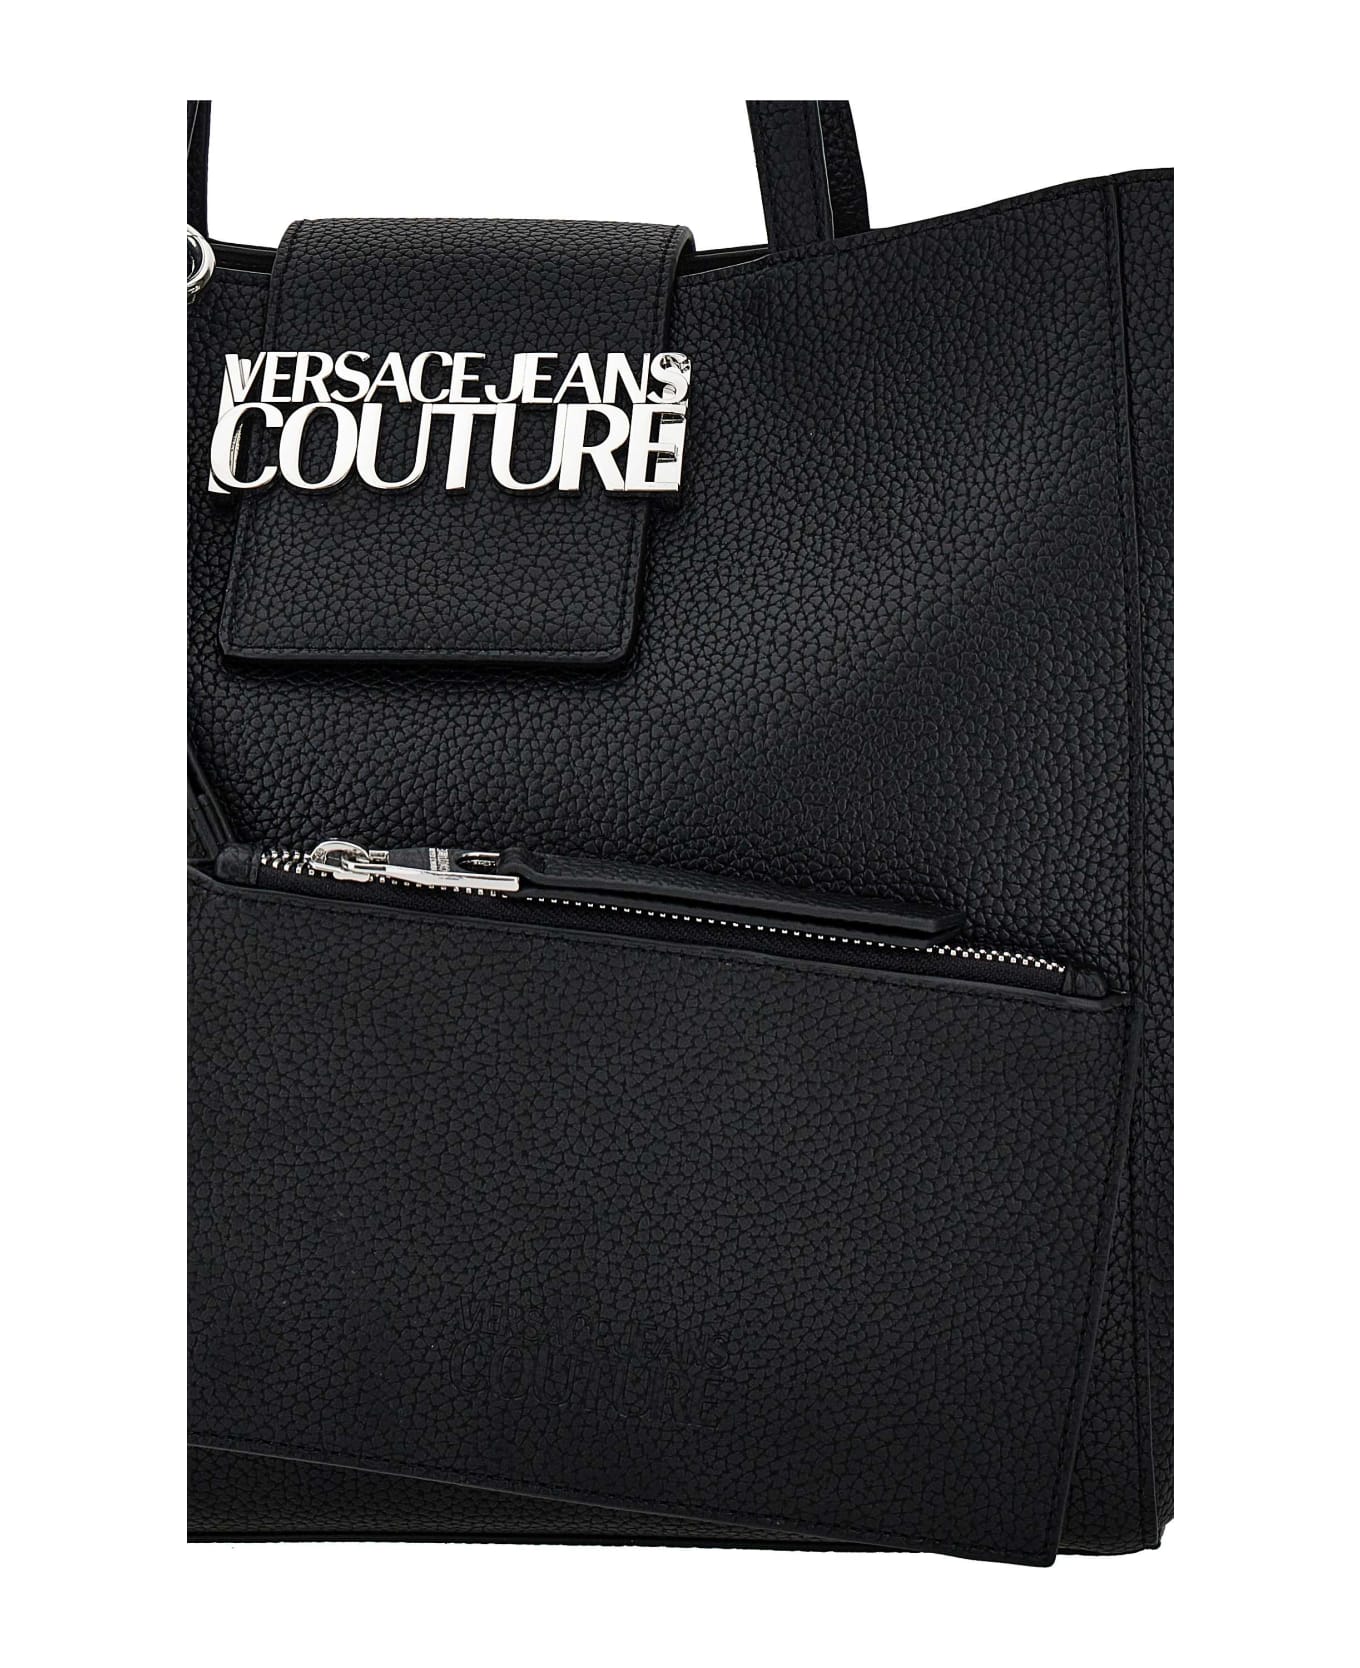 Versace Jeans Couture Shopper Bag - NERO